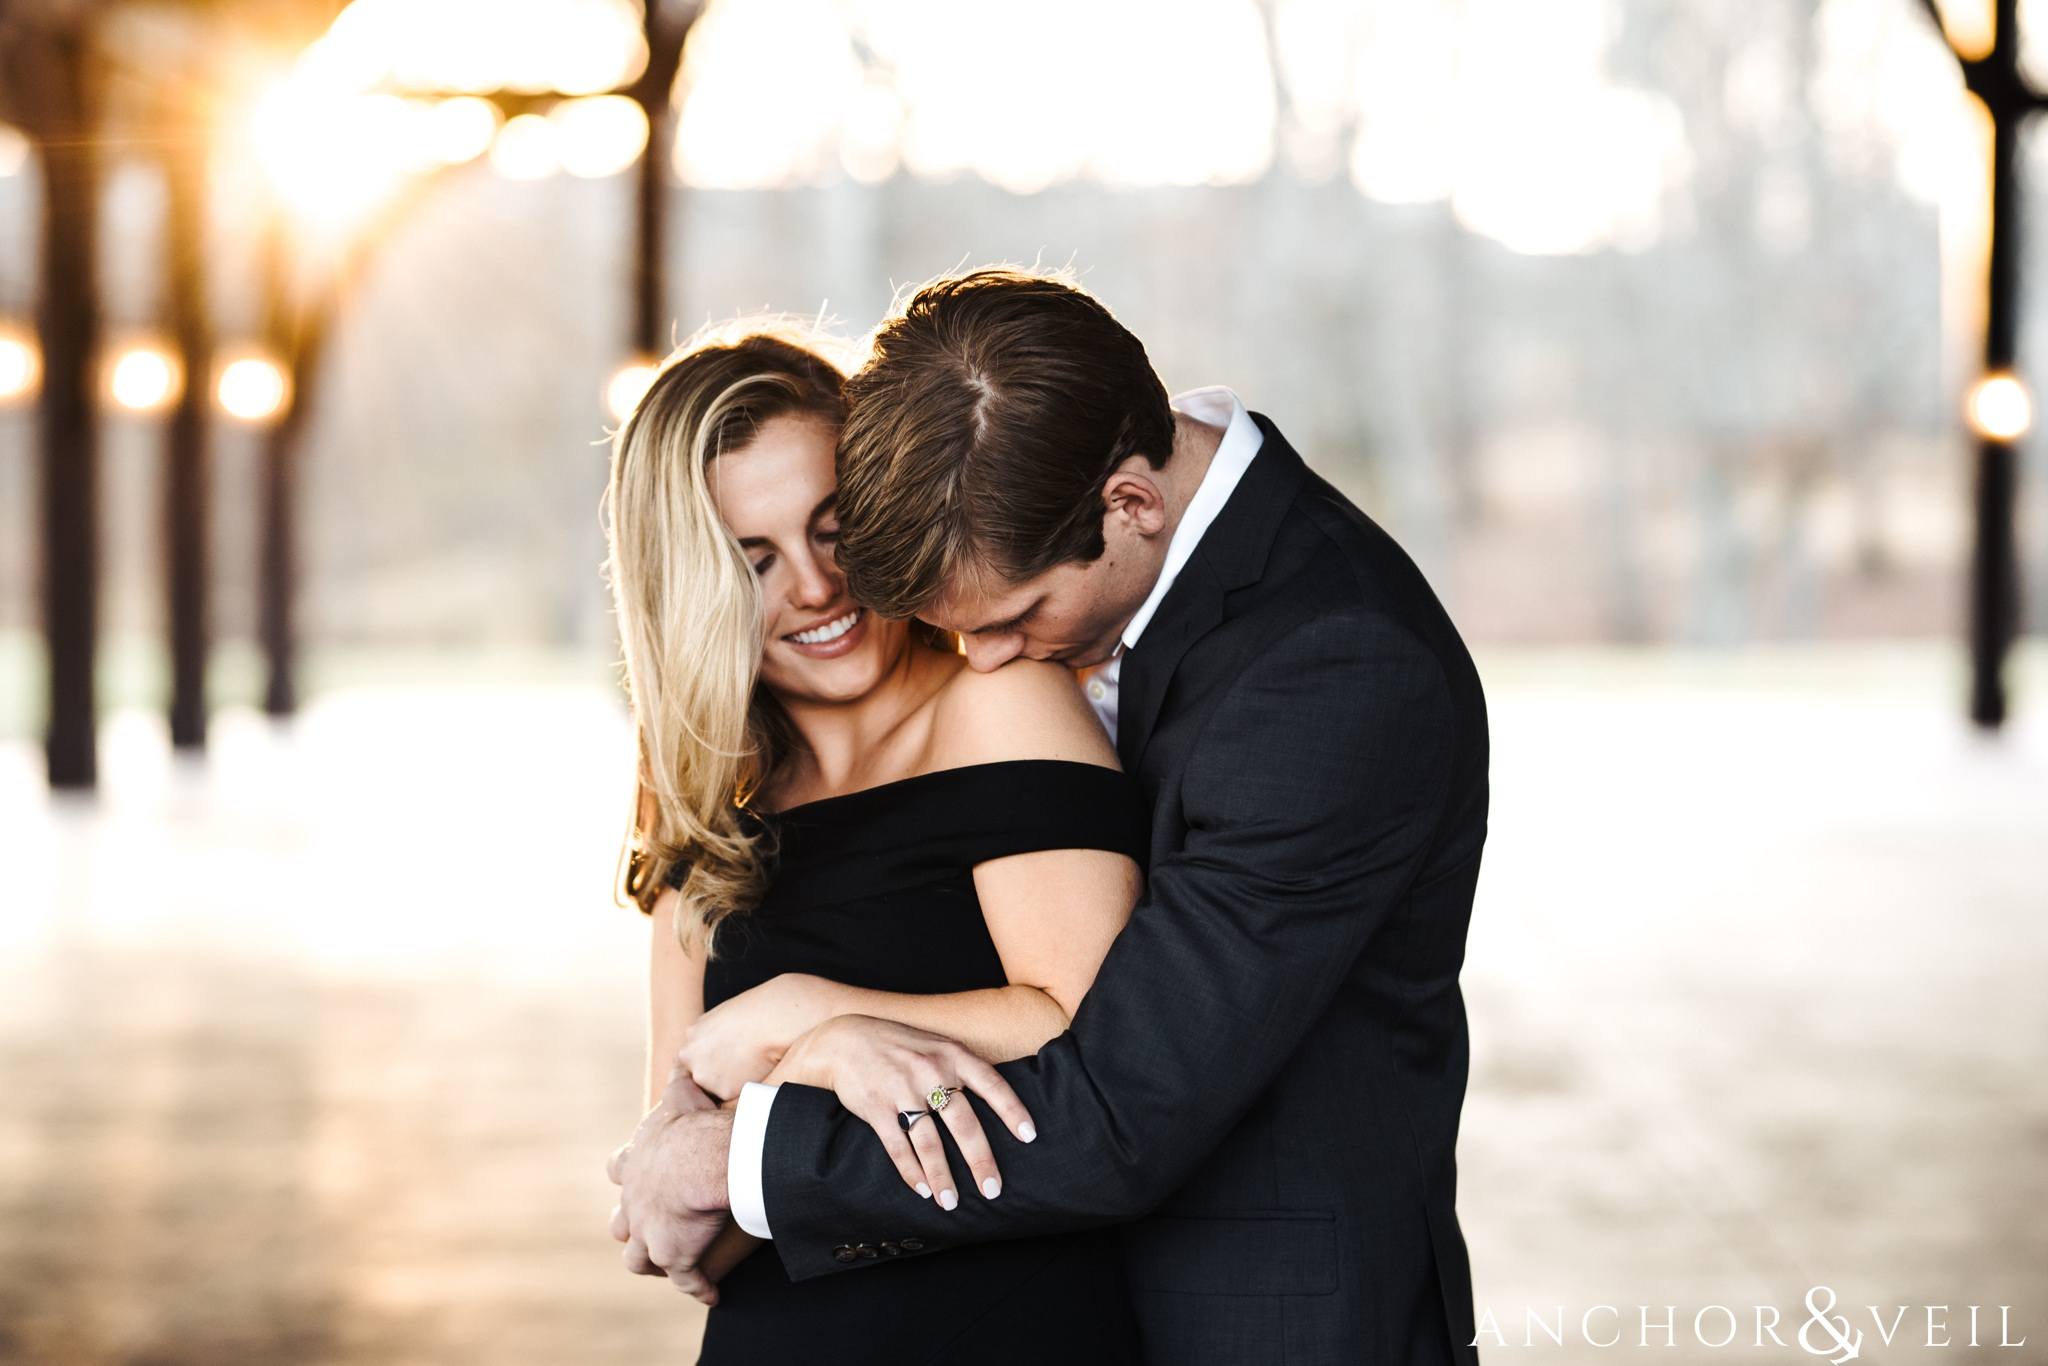 kissing her shoulder during their Dale Earnhardt Inc Engagement Session Mooresville